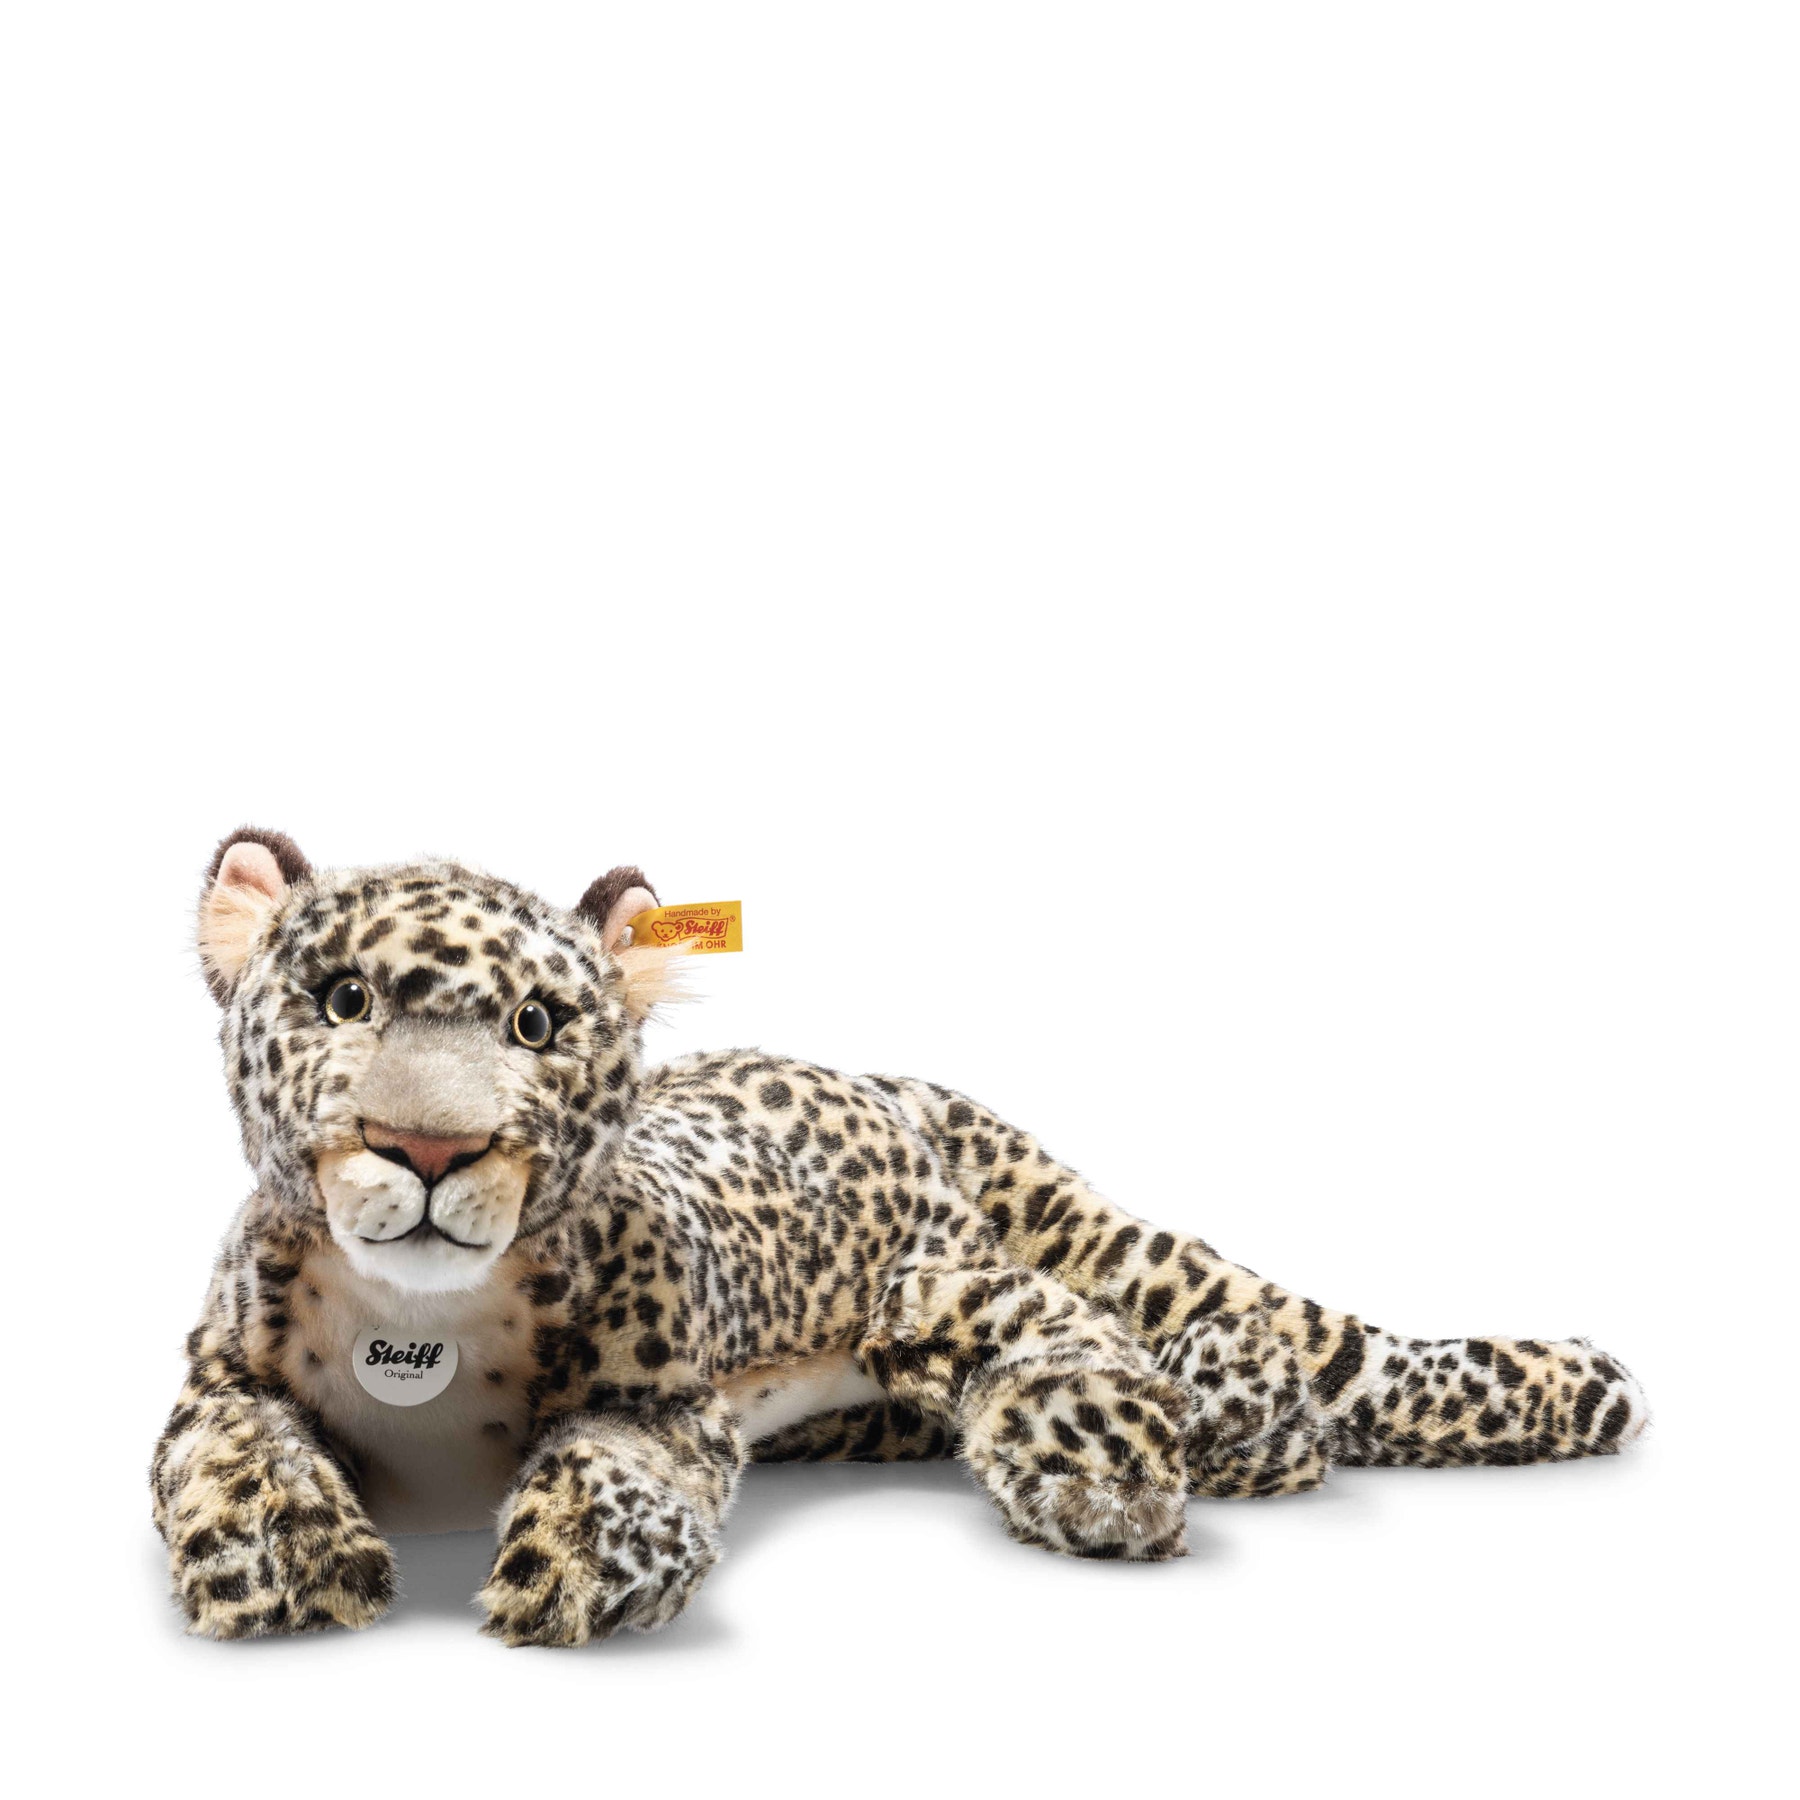 Parddy Leopard